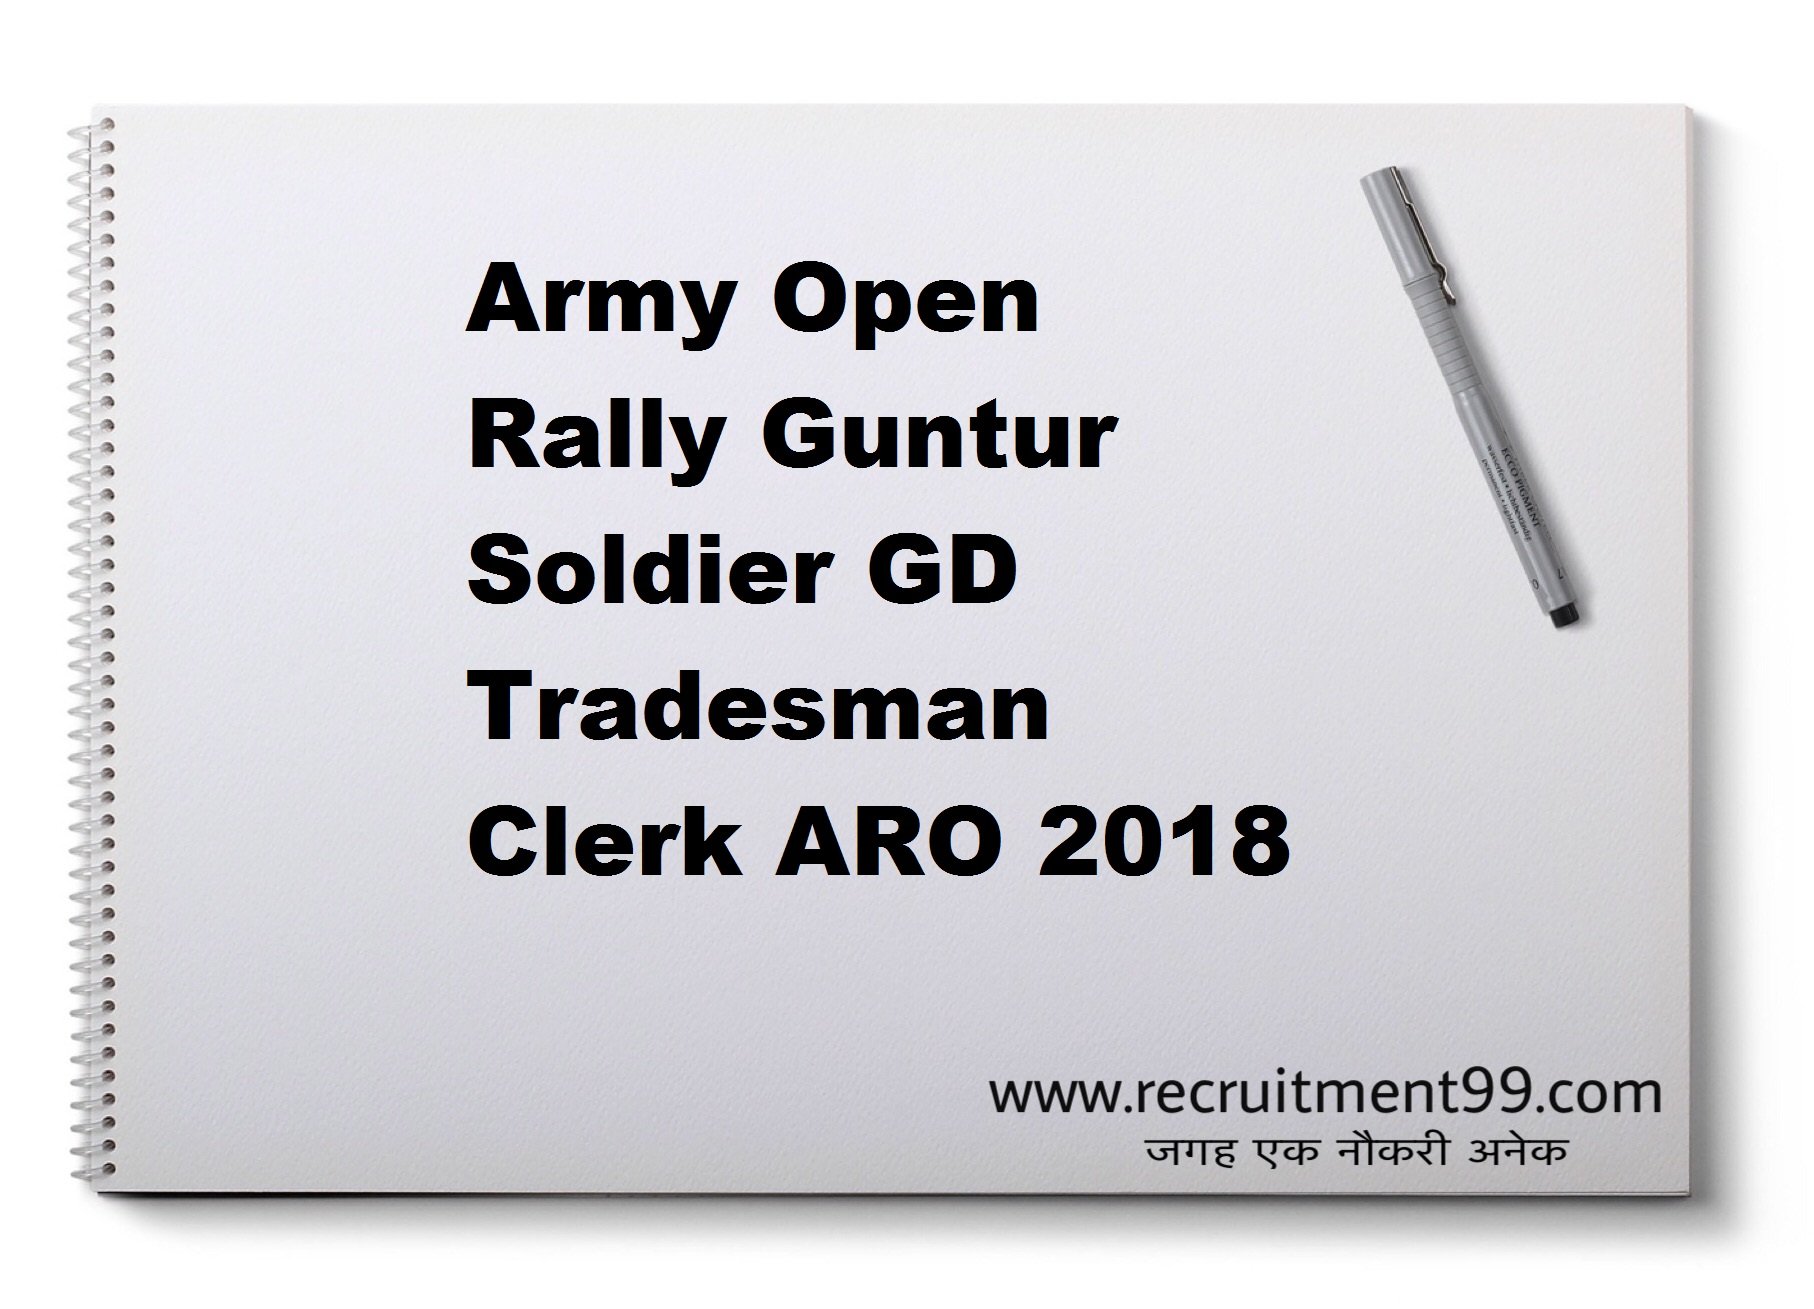 Army Open Rally ARO Guntur Soldier GD Clerk Tradesman Admit Card Result 2018